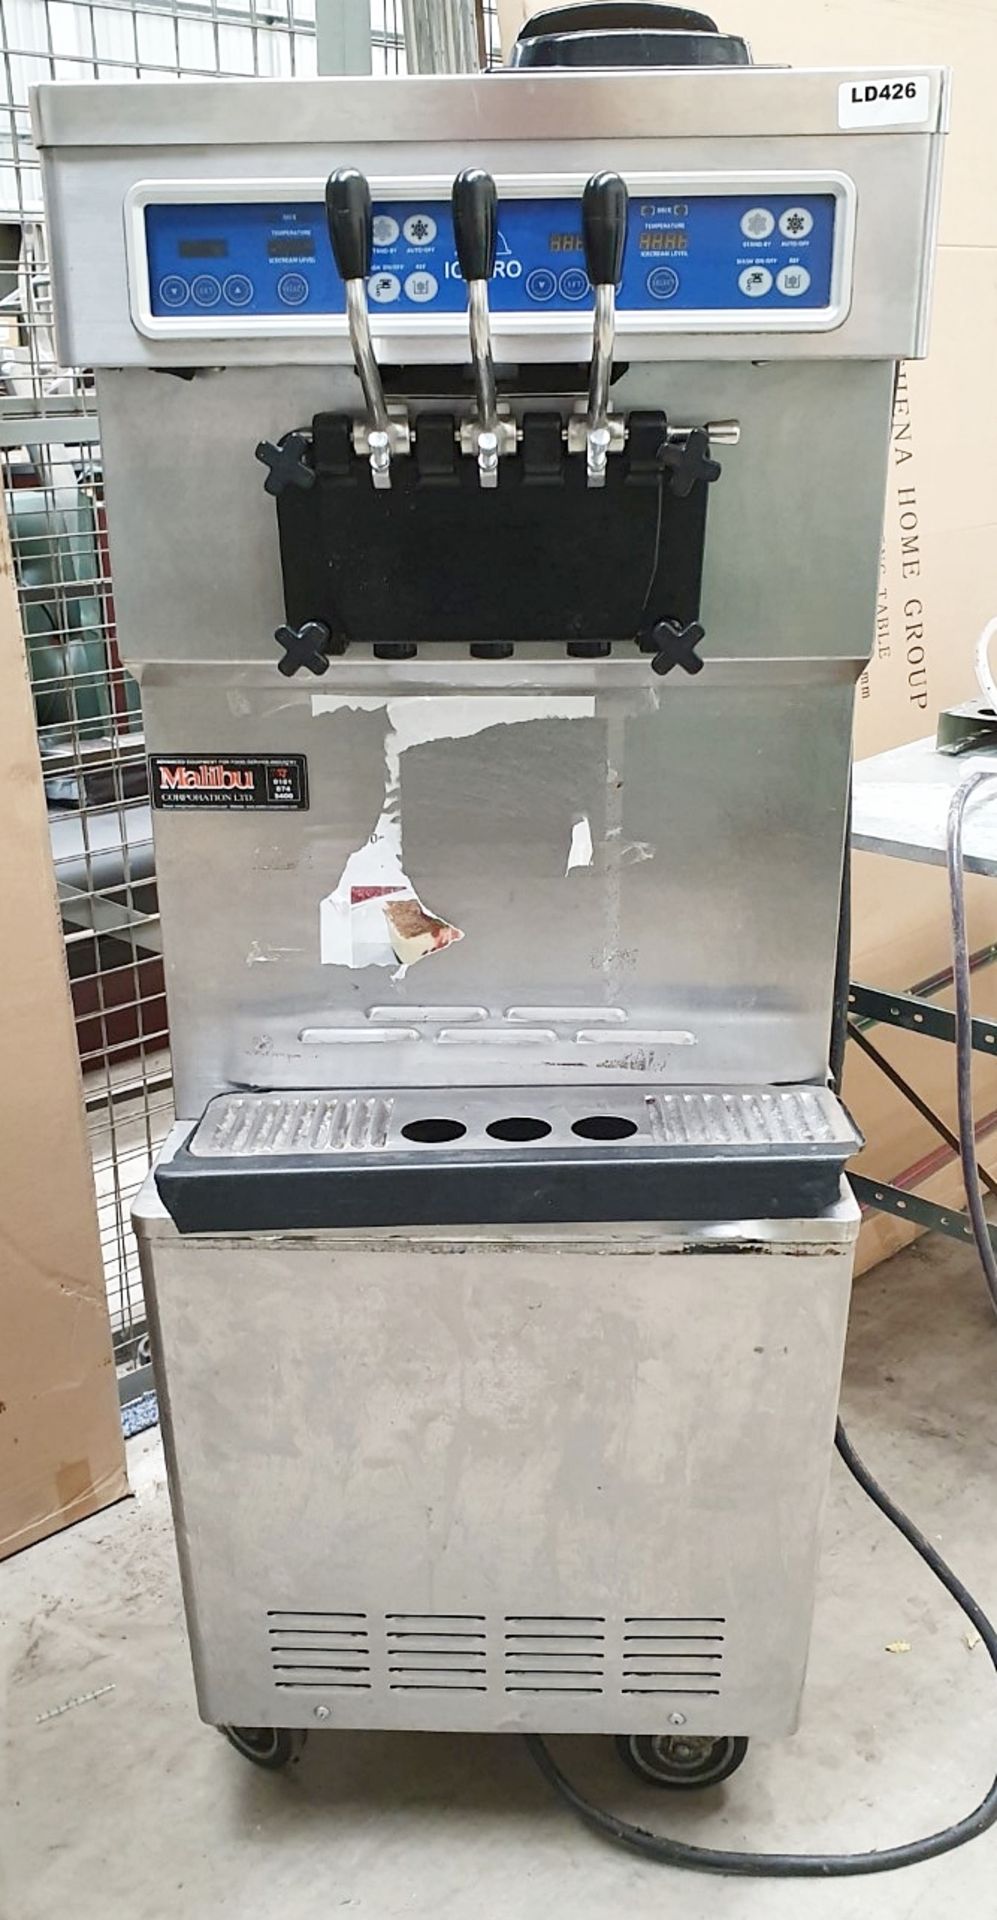 1 x ICETRO Ice Cream Machine - Ref: LD427 - CL350 - Location: Altrincham WA14